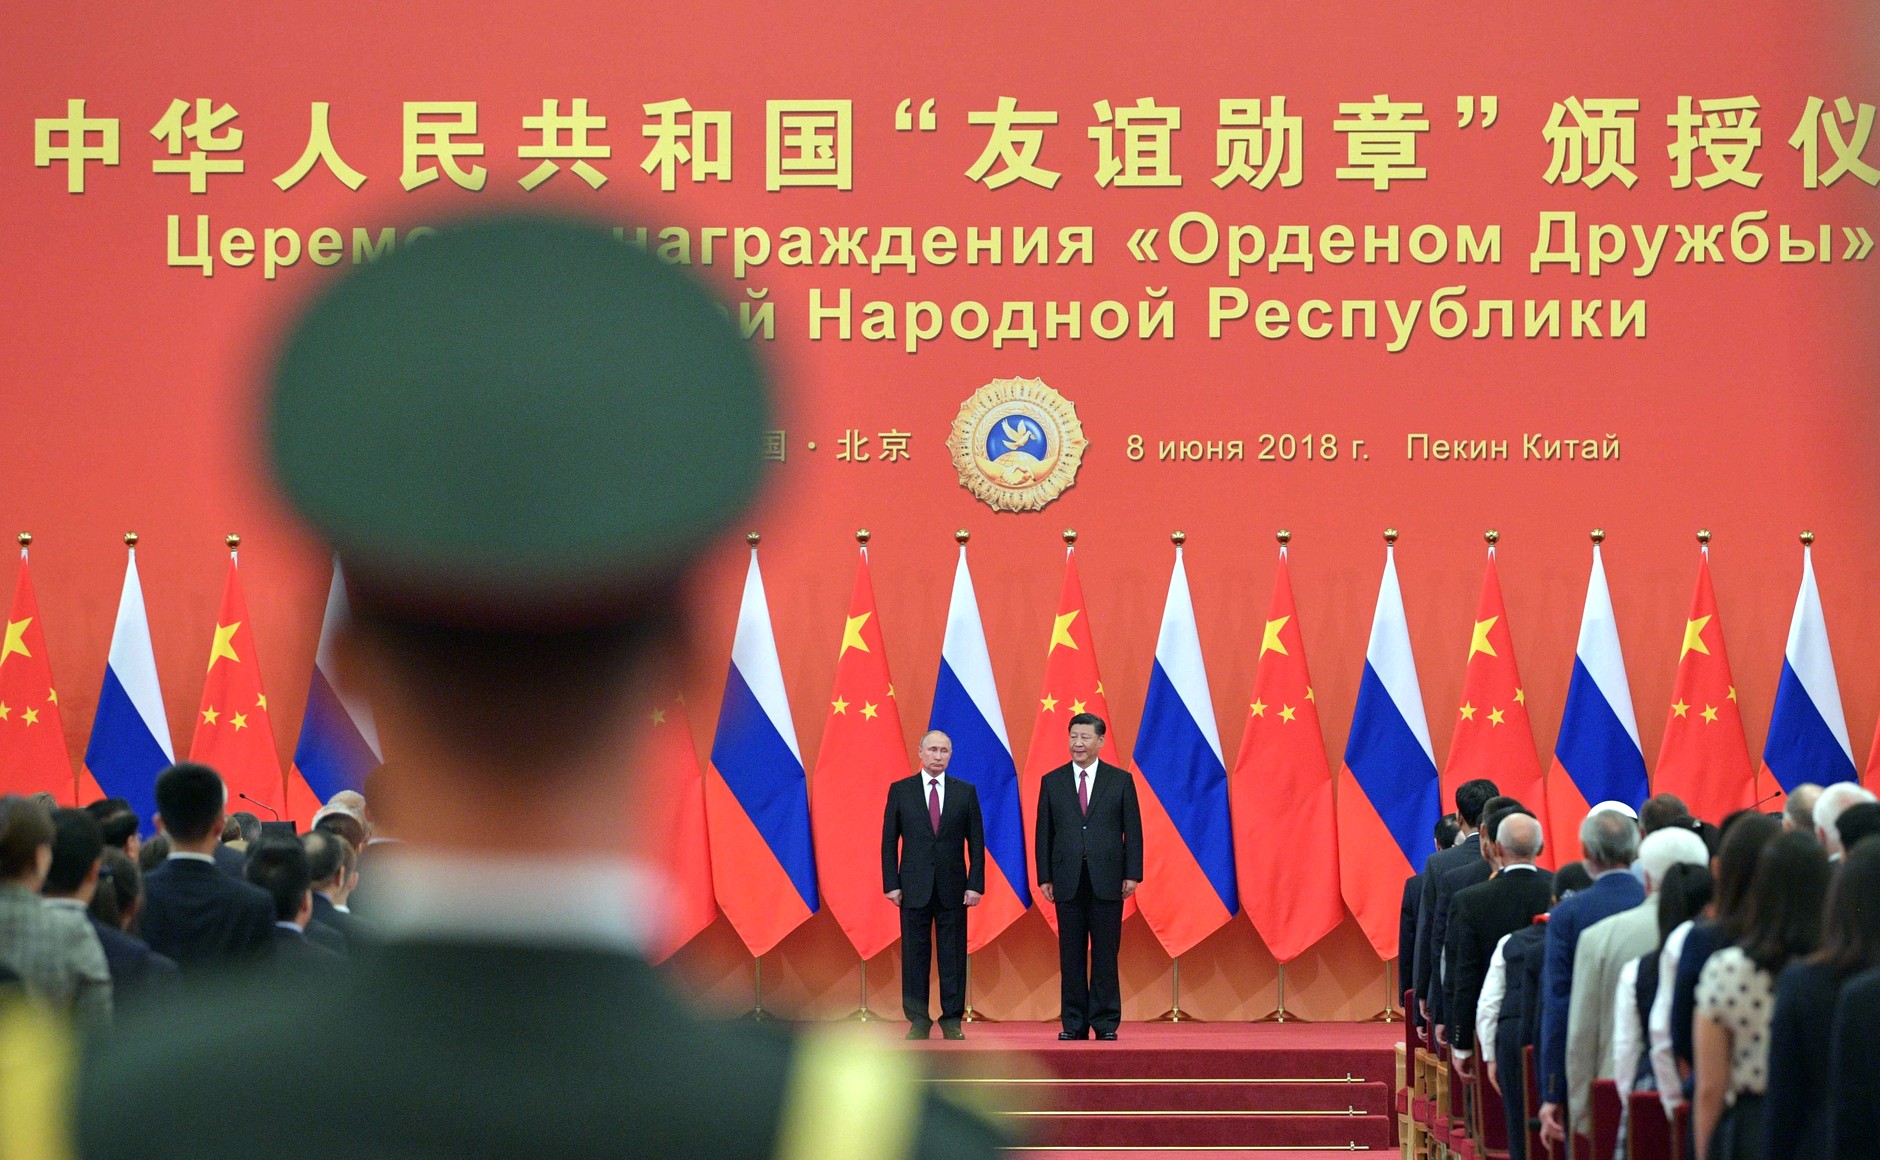 File:Vladimir Putin awarded the Chinese Order of Friendship 05.jpg - Wikimedia Commons